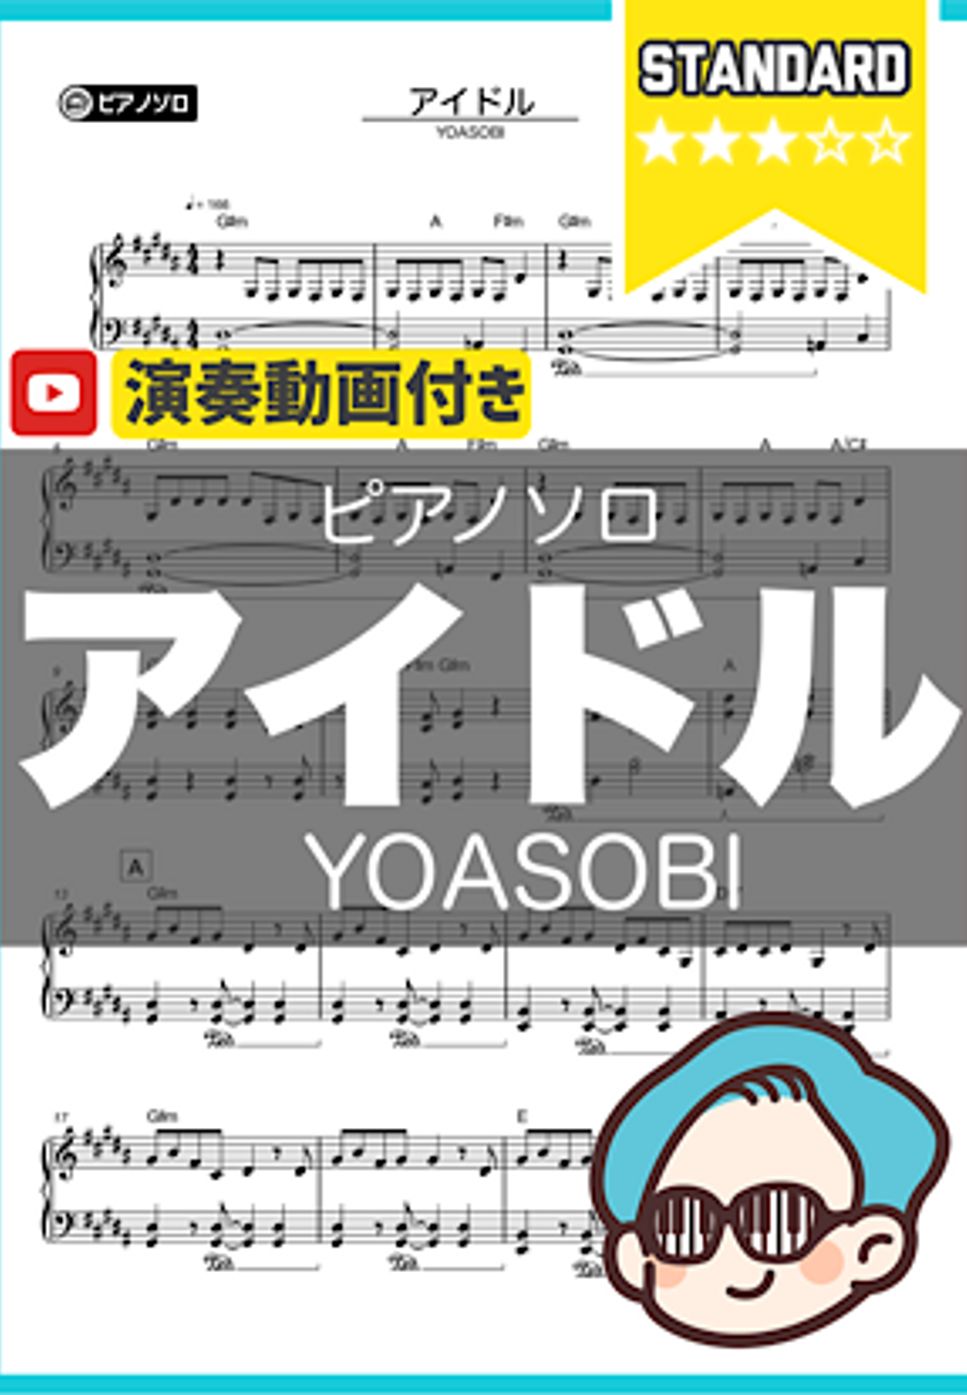 YOASOBI - アイドル(中級ver.) by シータピアノ